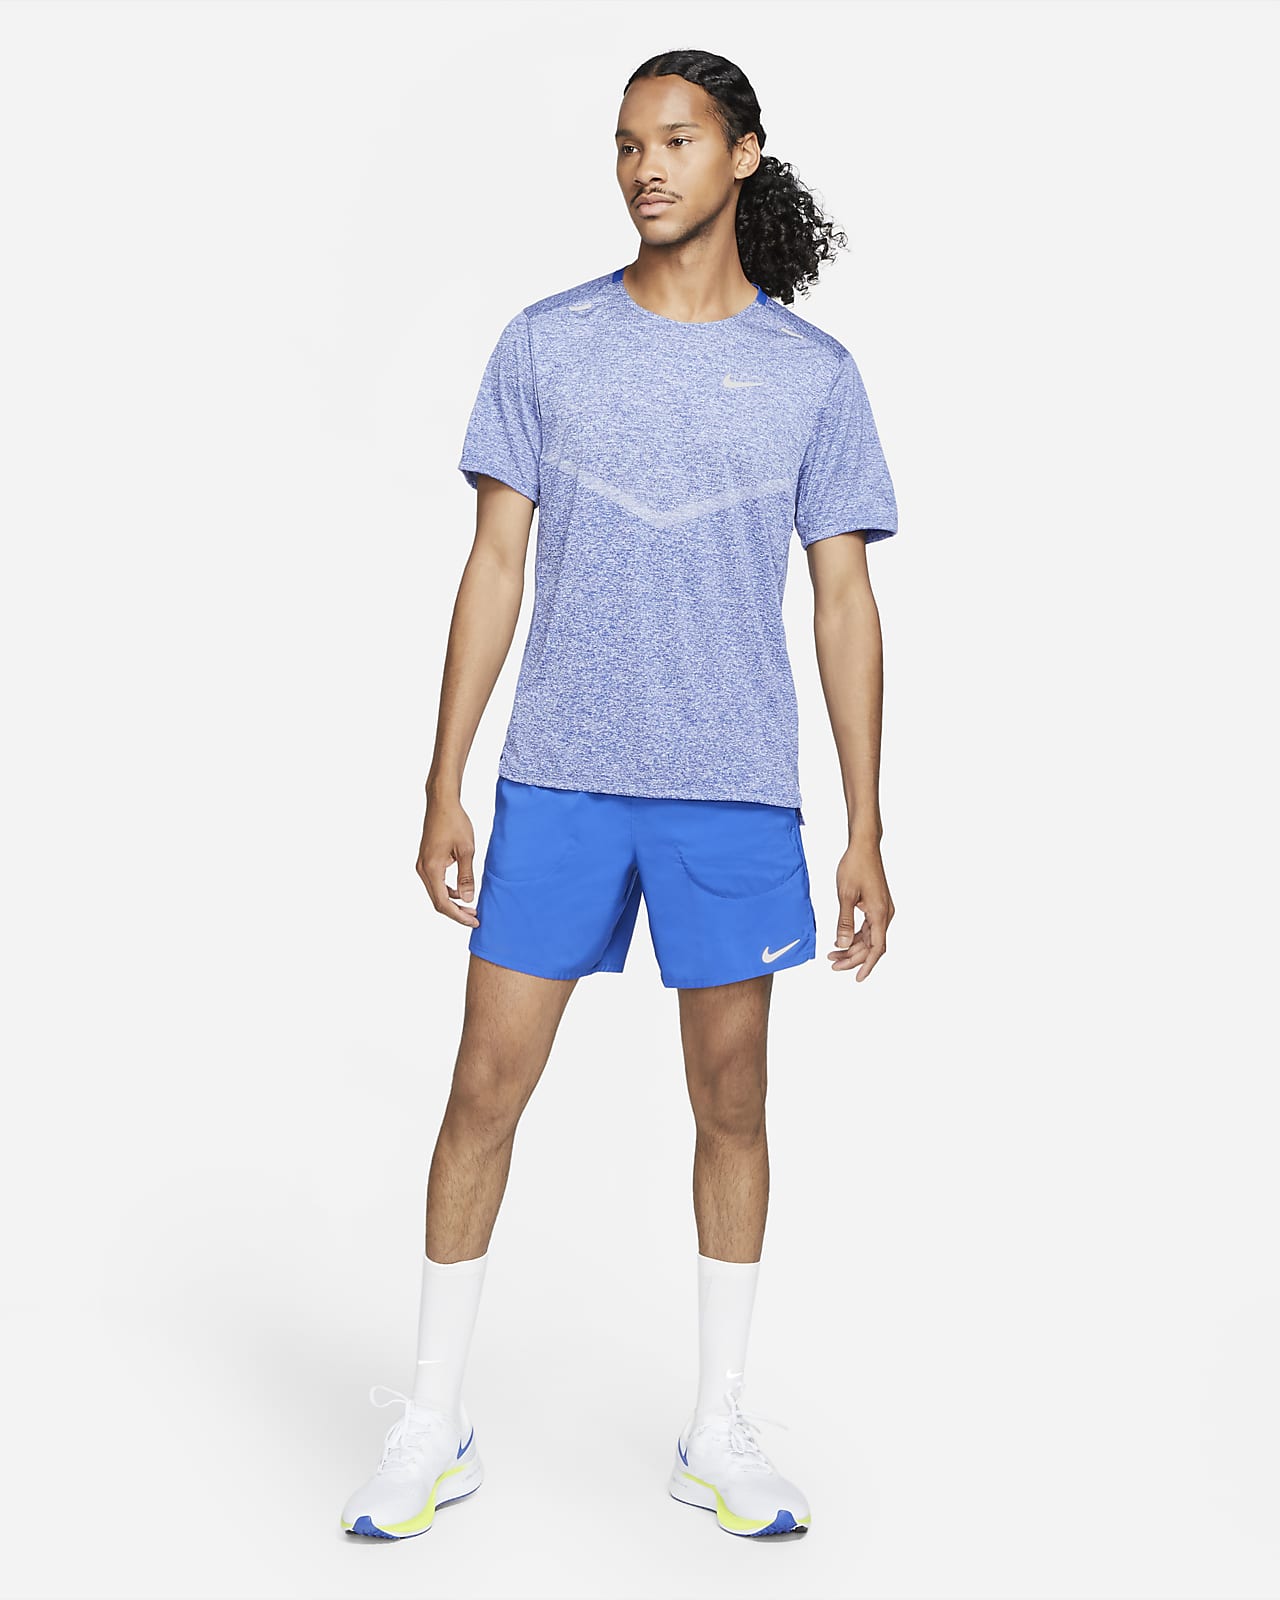 Nike Dri-FIT Rise 365 Men's Short-Sleeve Running Top. Nike.com